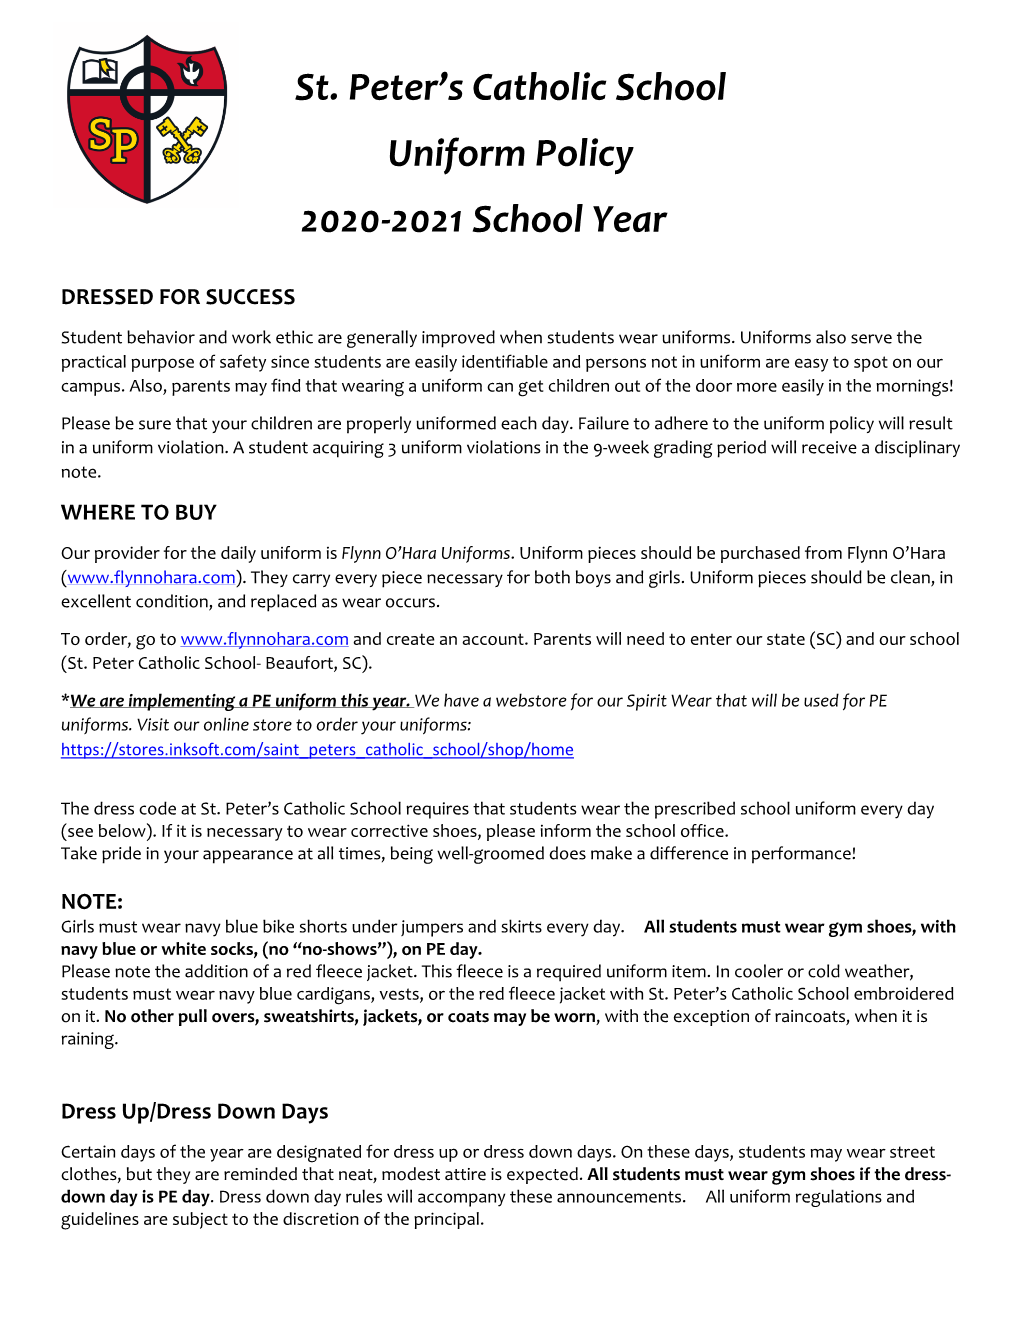 St. Peter's Catholic School Uniform Policy 2020-2021 School Year